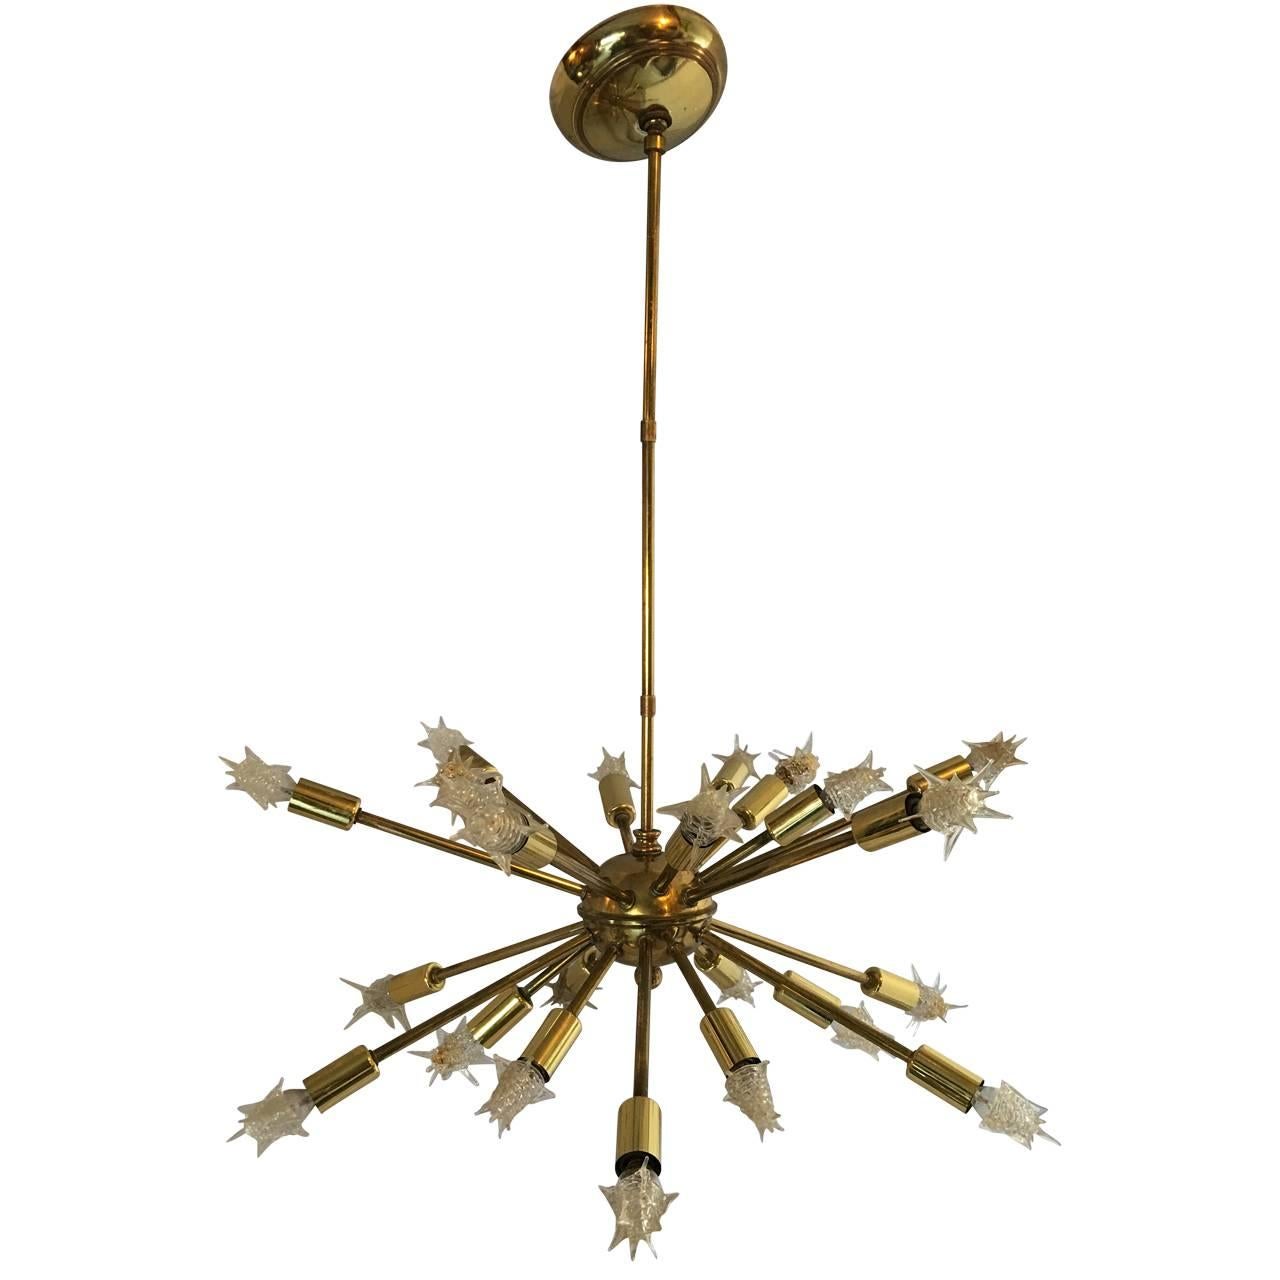 Medium size brass Sputnik chandelier with 24 original lightbulbs.